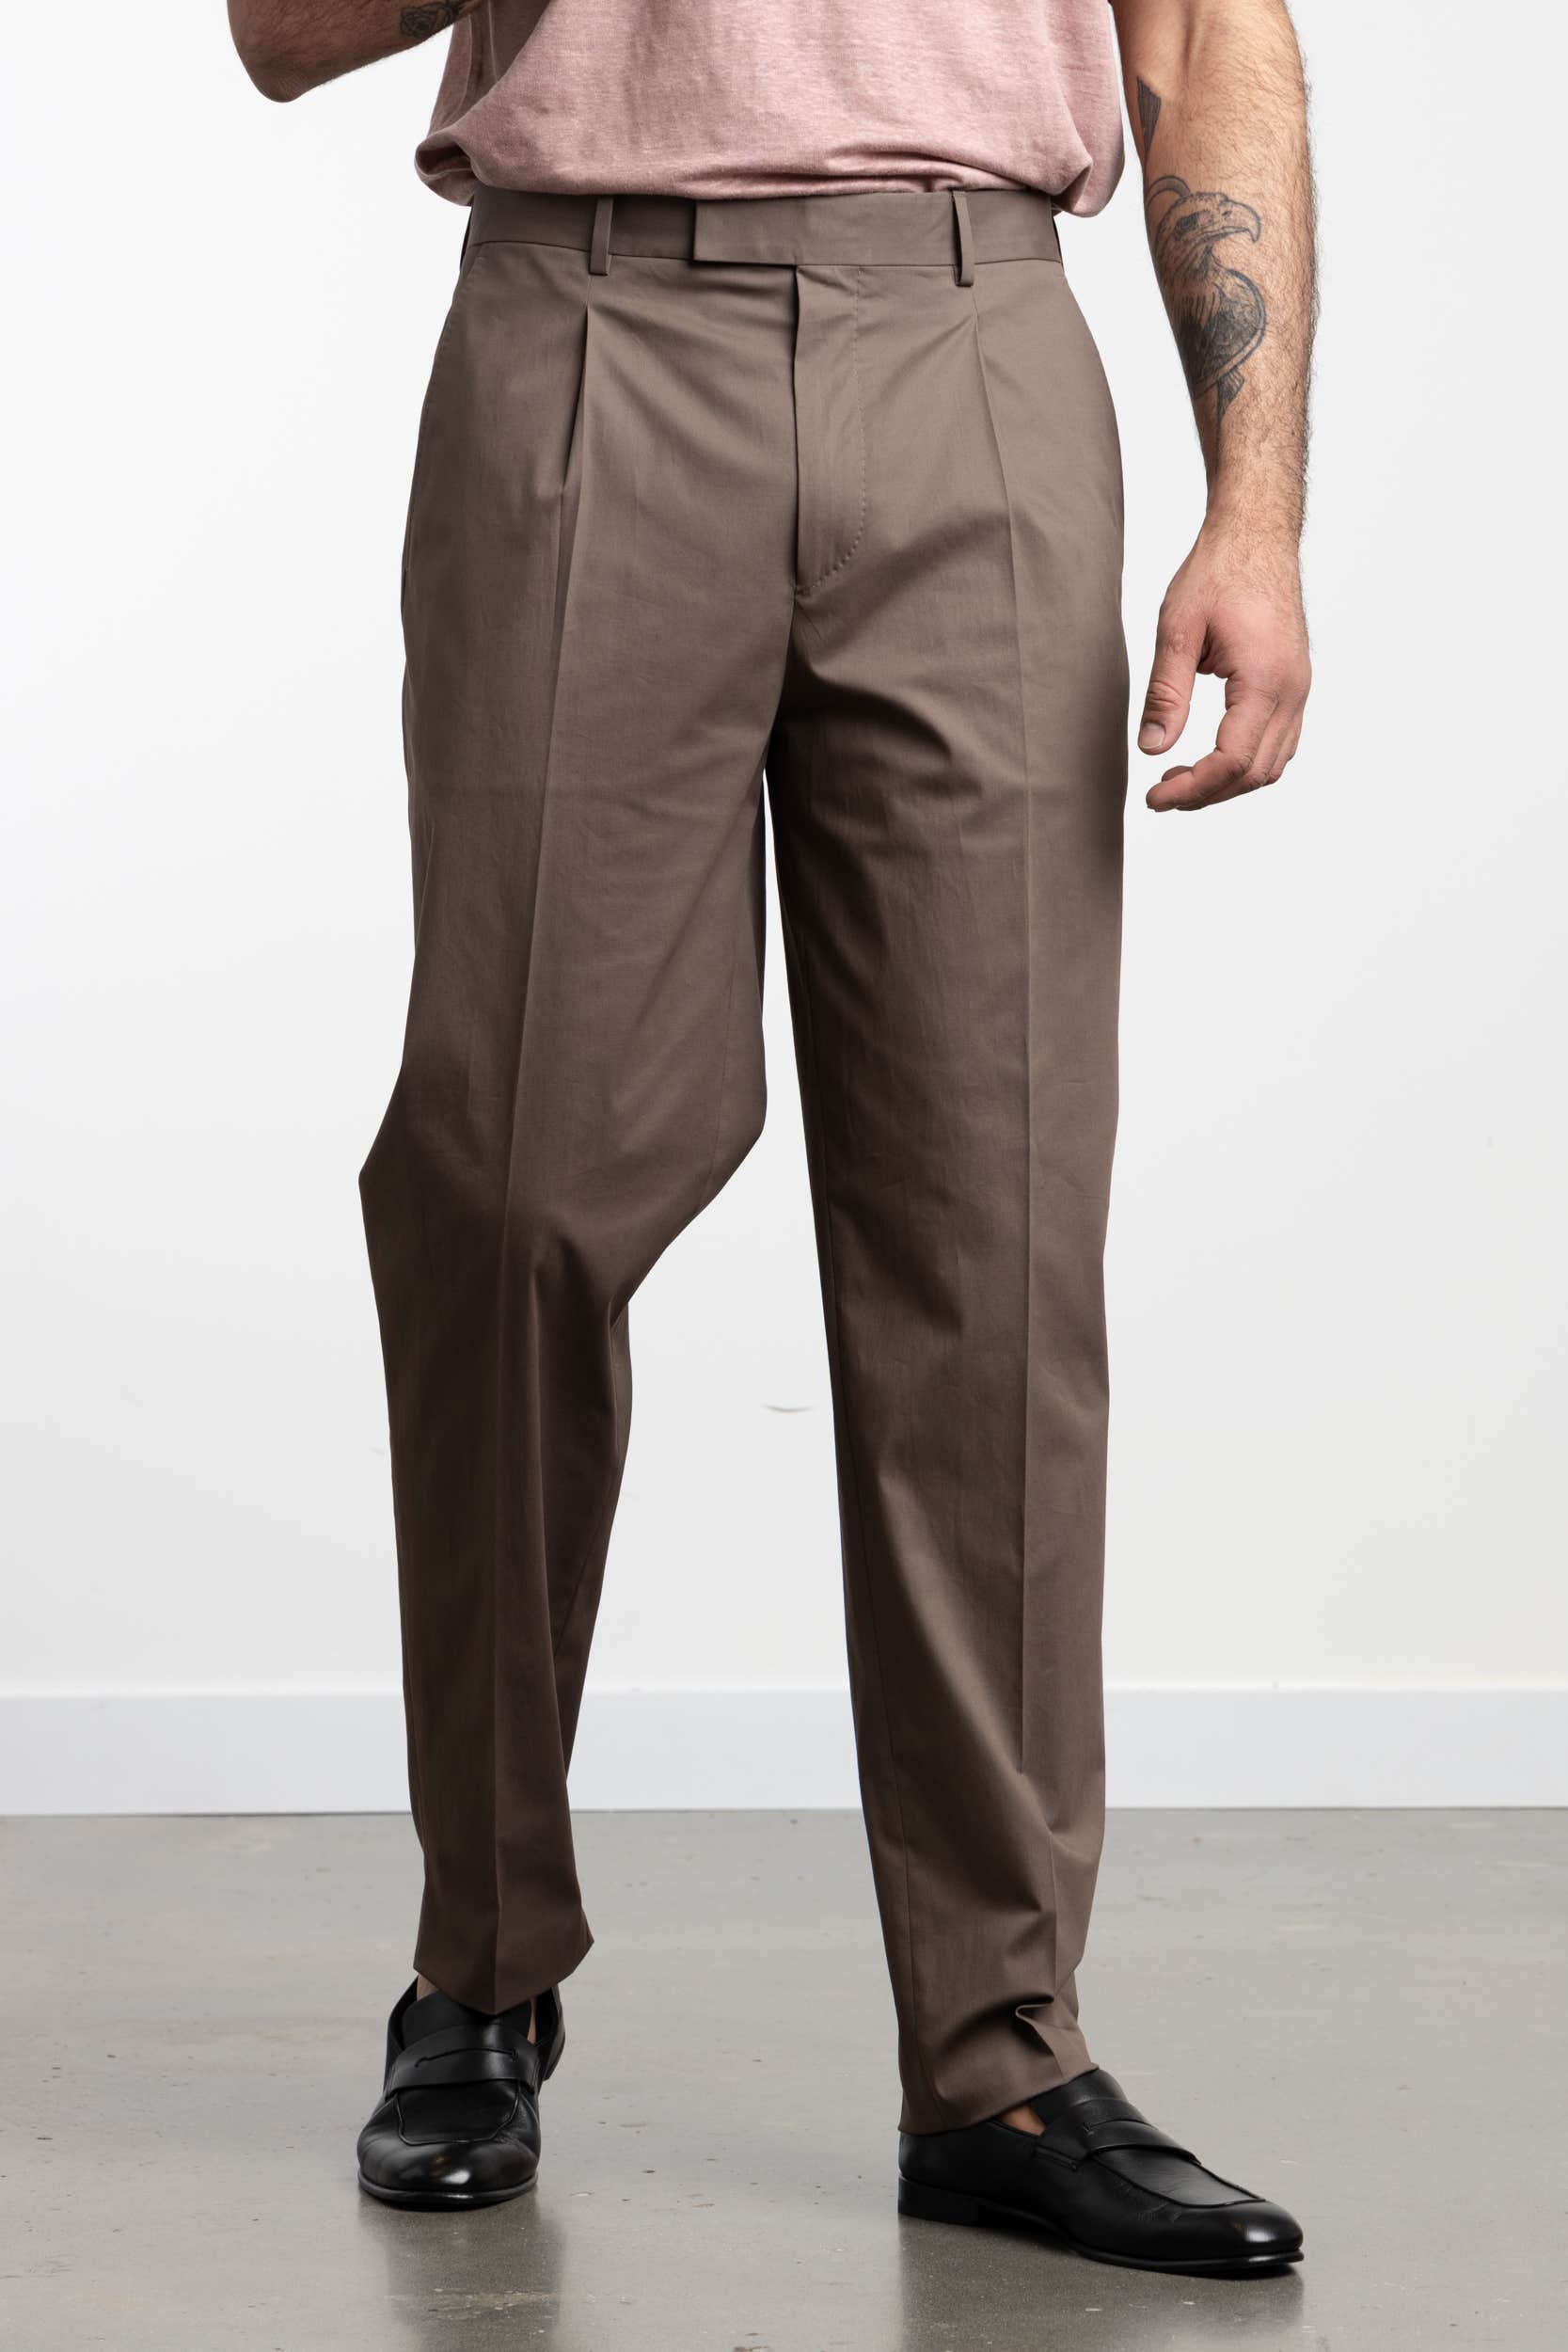 Brown Men's Dress Pants